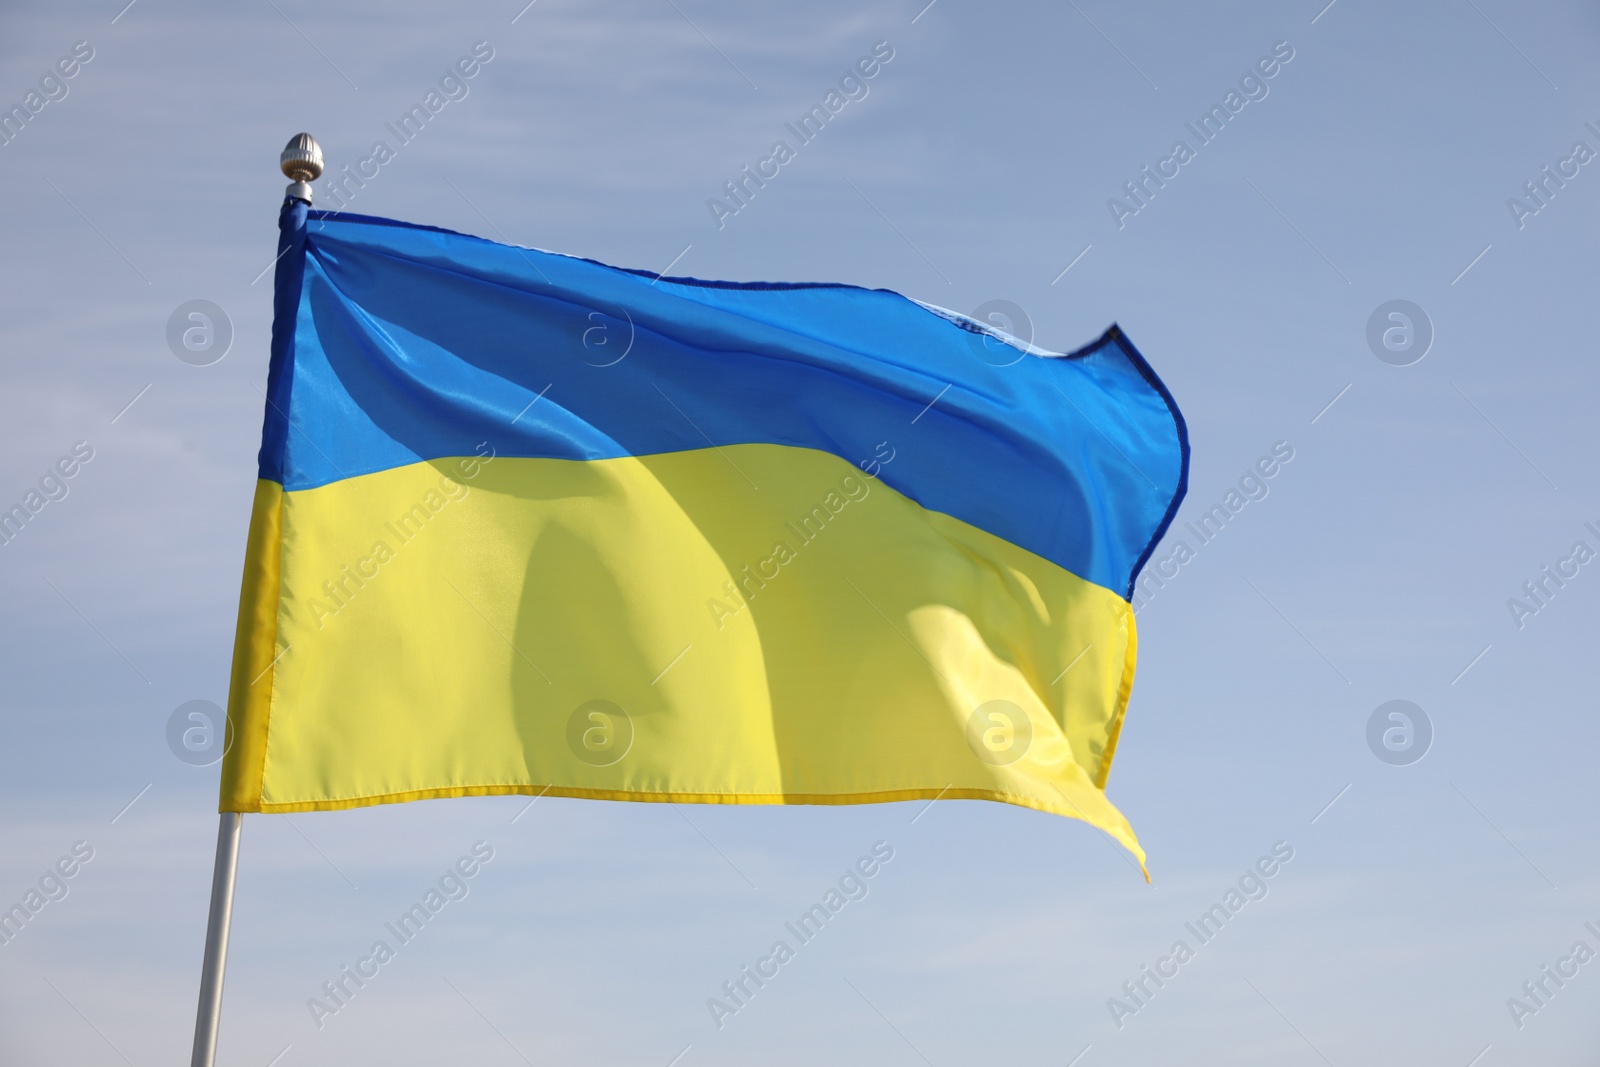 Photo of National flag of Ukraine against blue sky, closeup